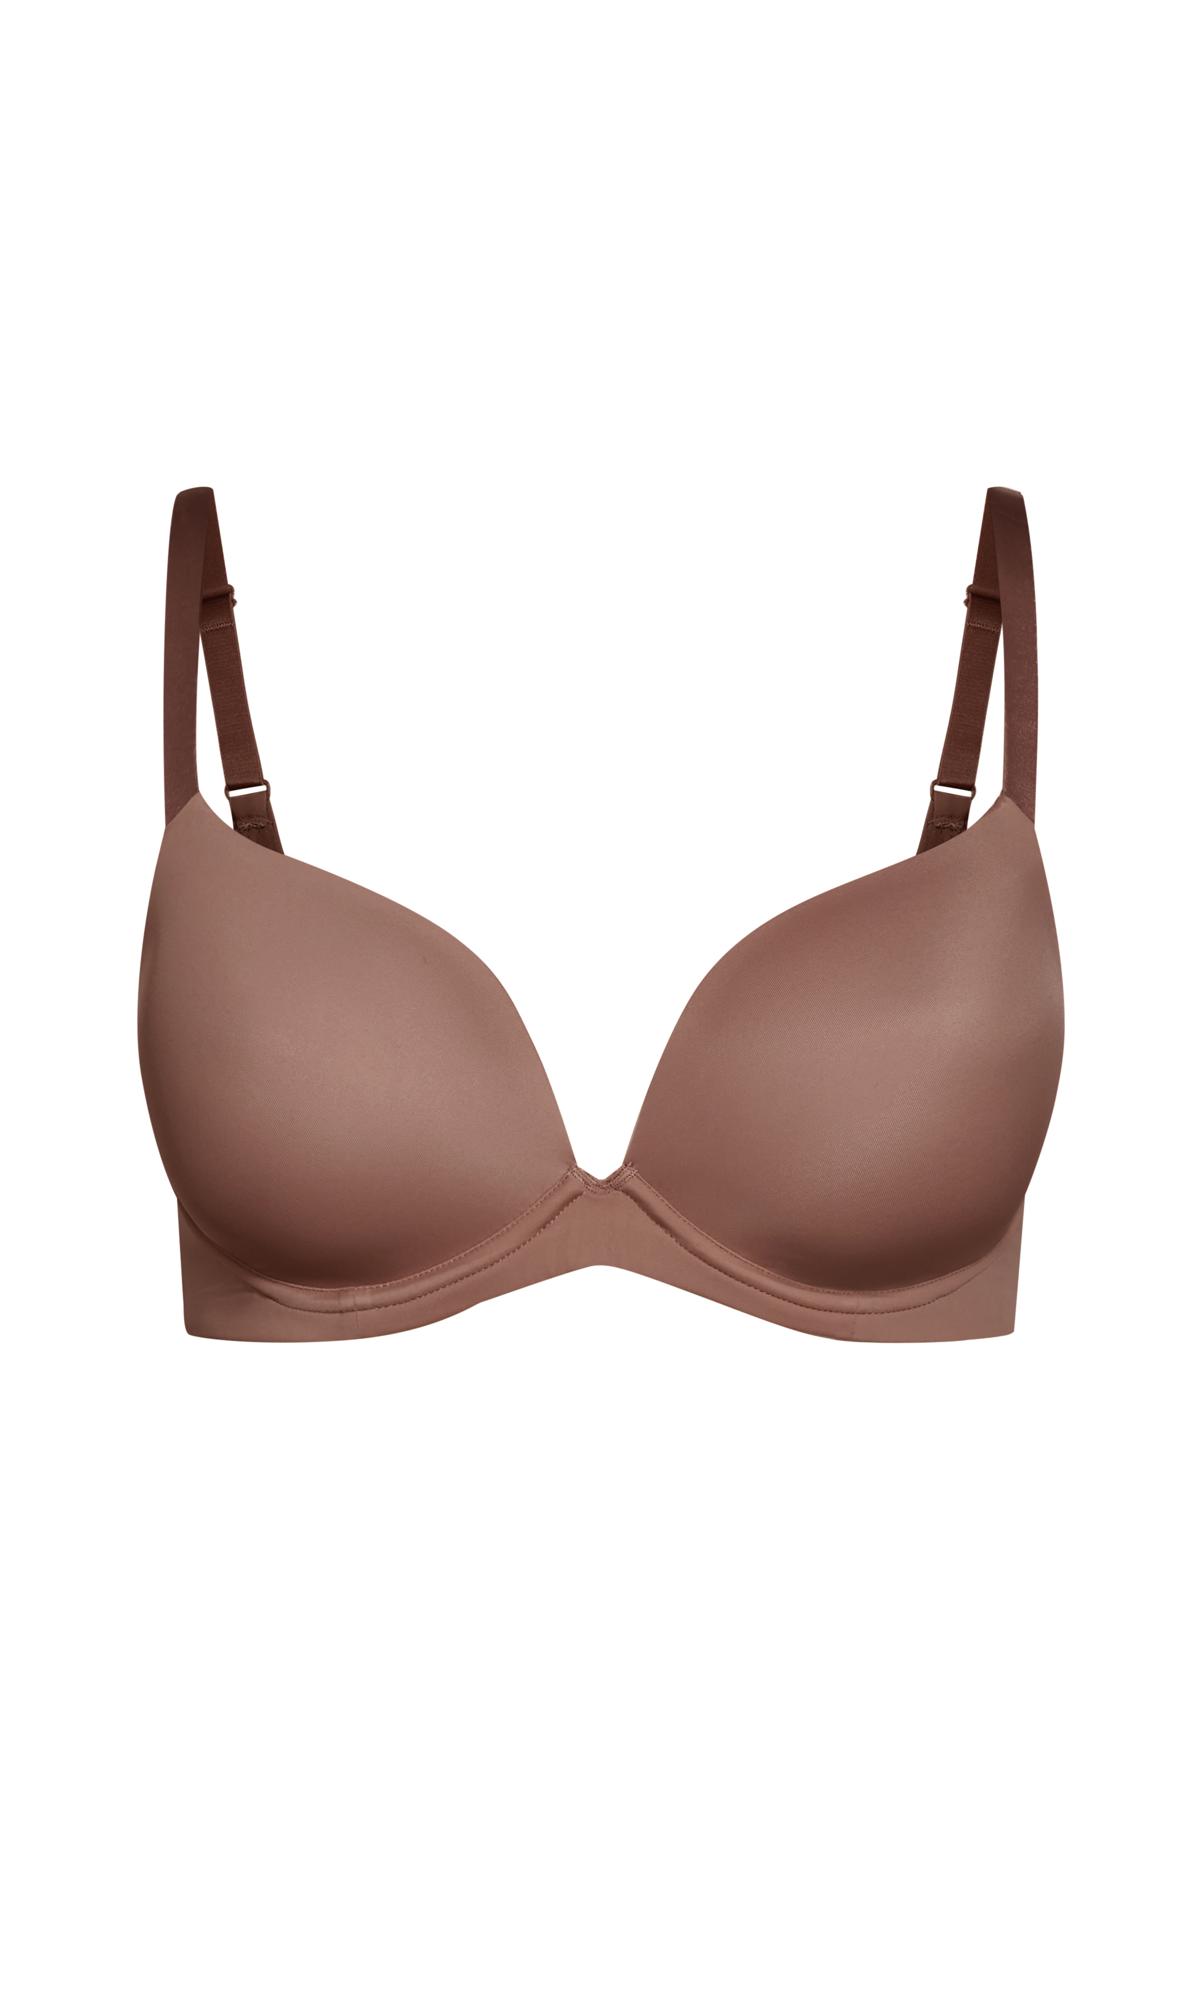 ASOS DESIGN Marina smoothing underwire bra in brown